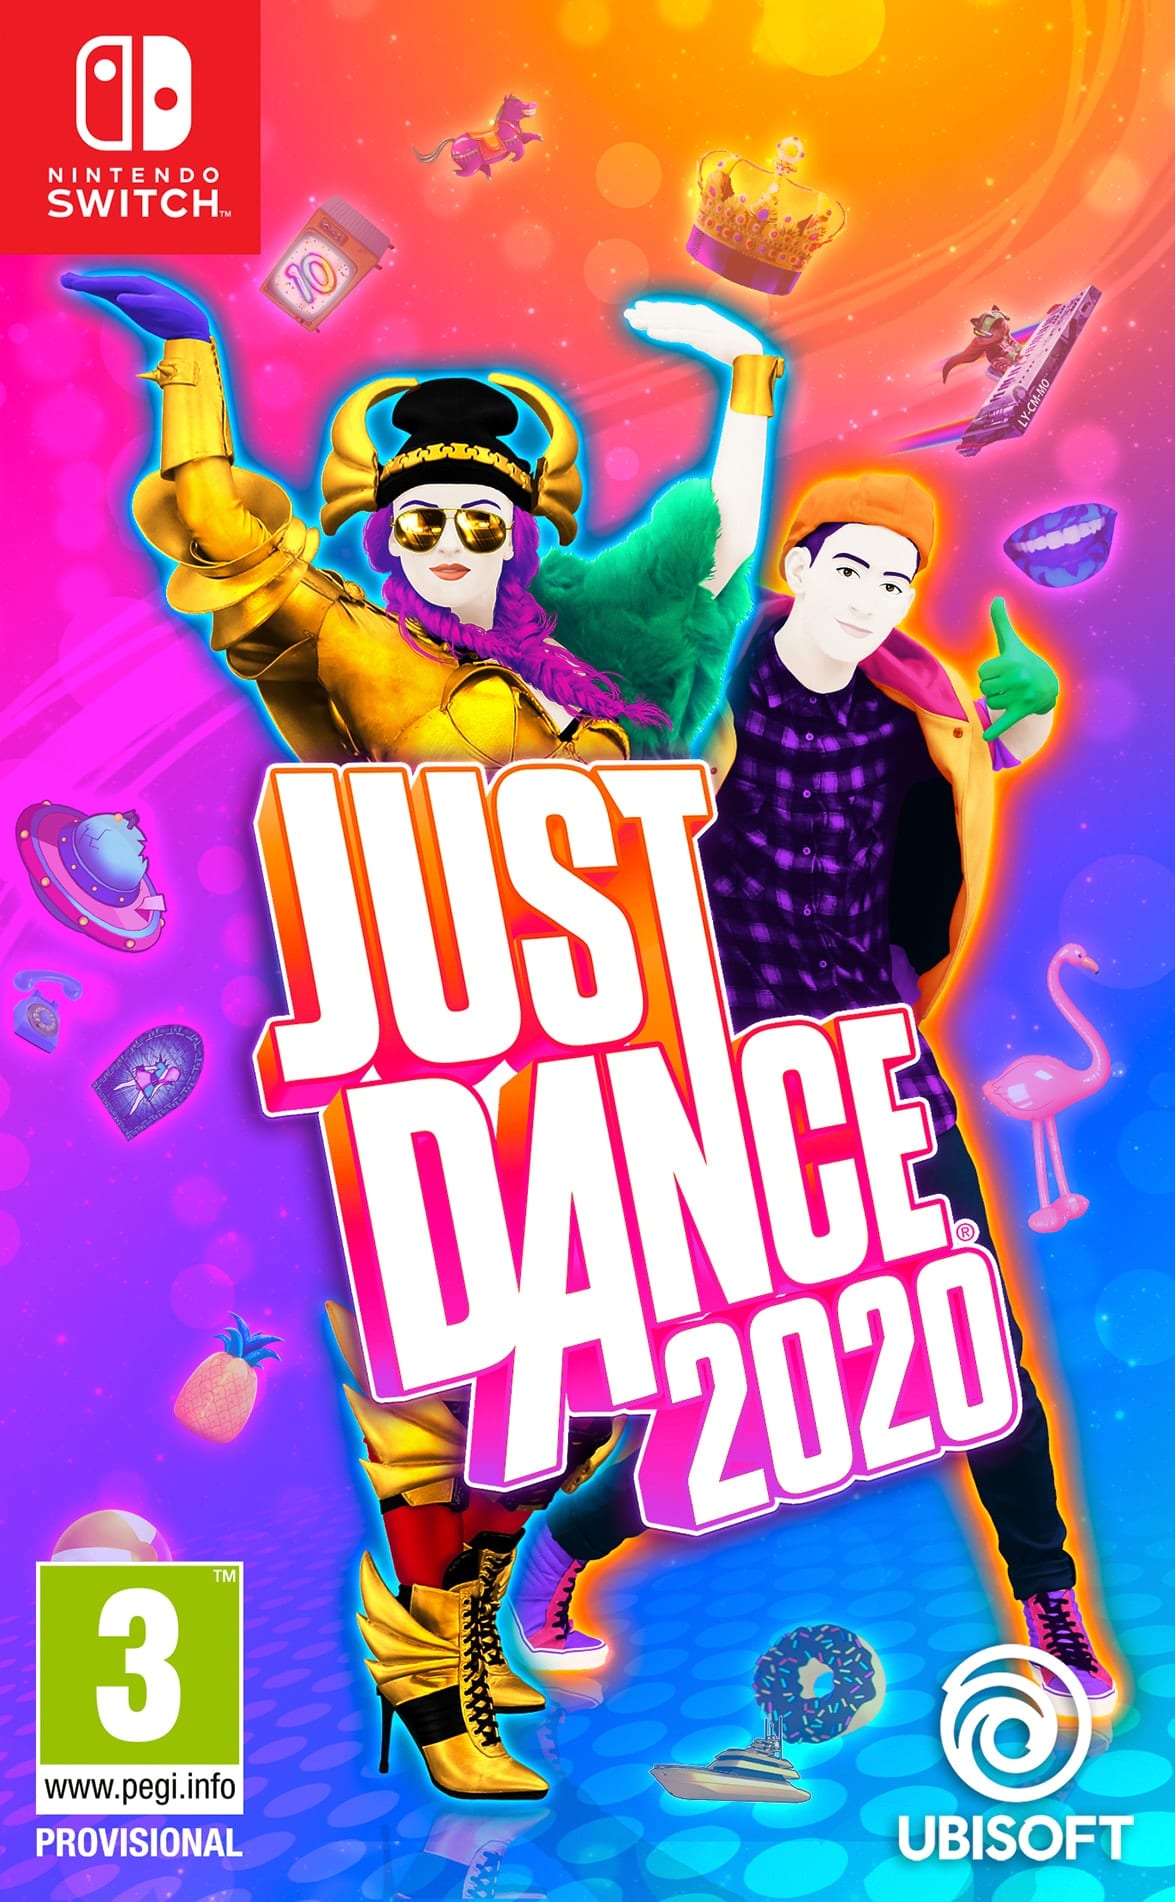 Just dance 2020 jaquette switch min 3